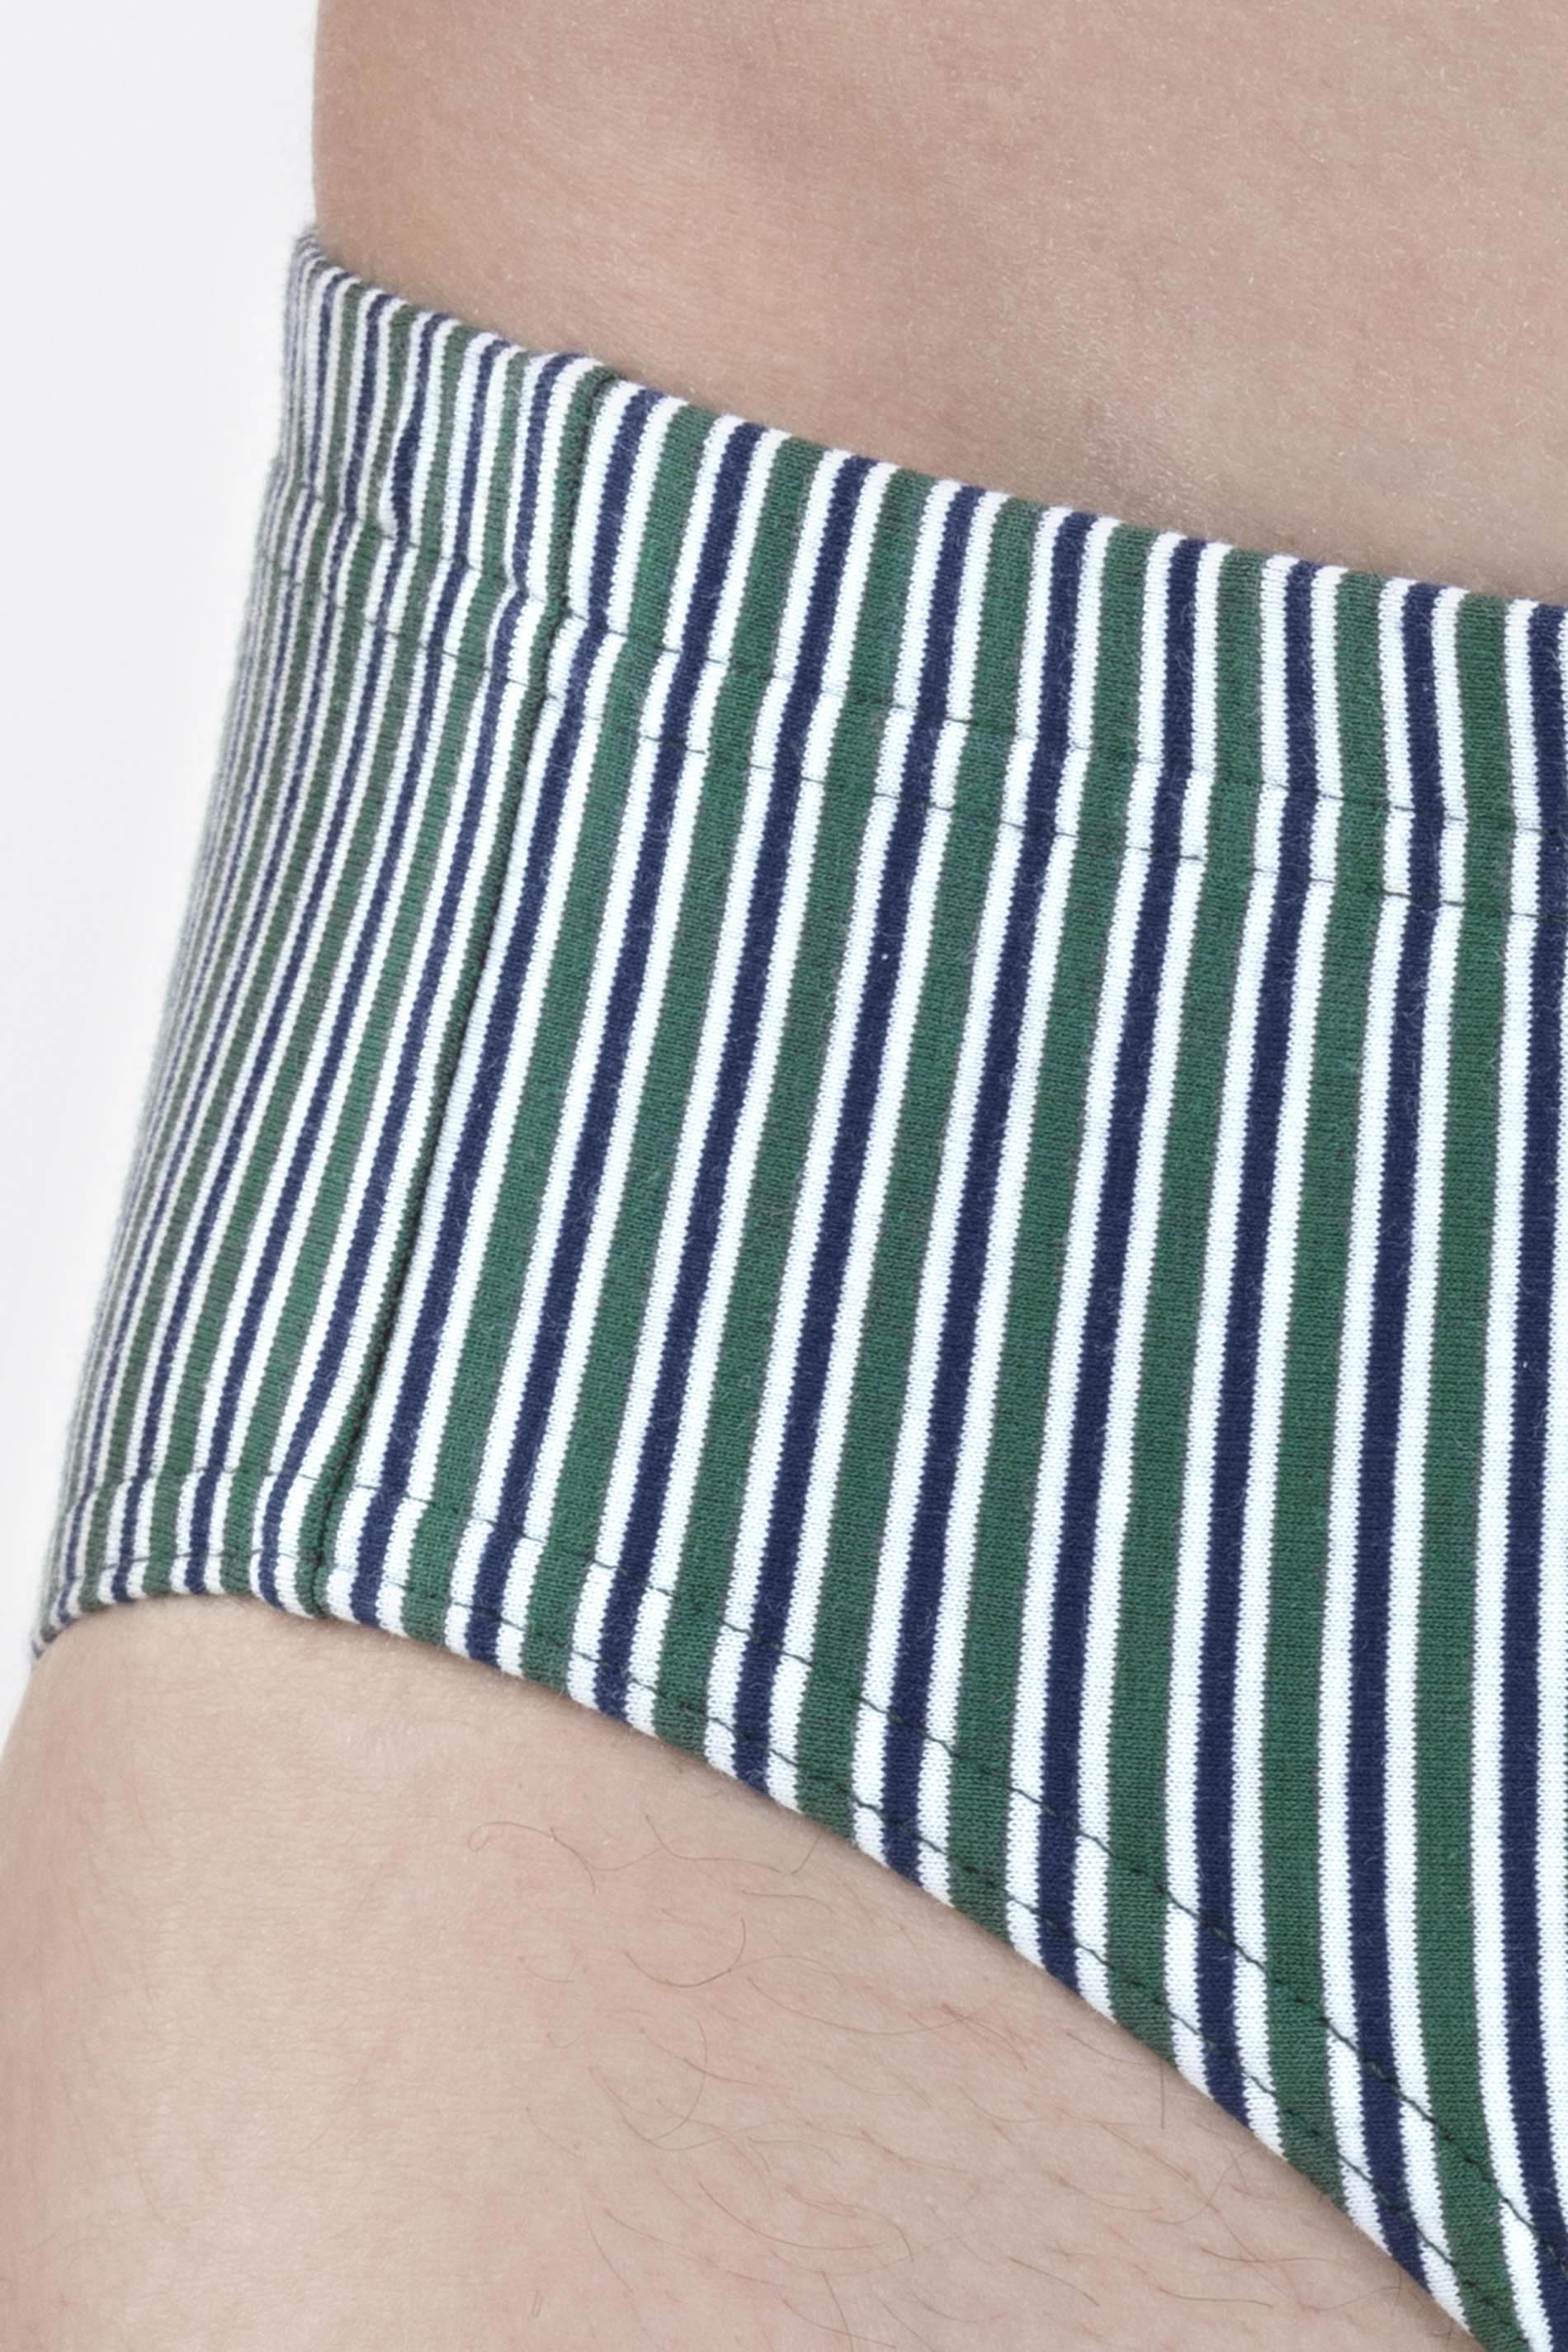 Jazz Pants Evergreen Serie 3 Col Stripes Detailansicht 01 | mey®